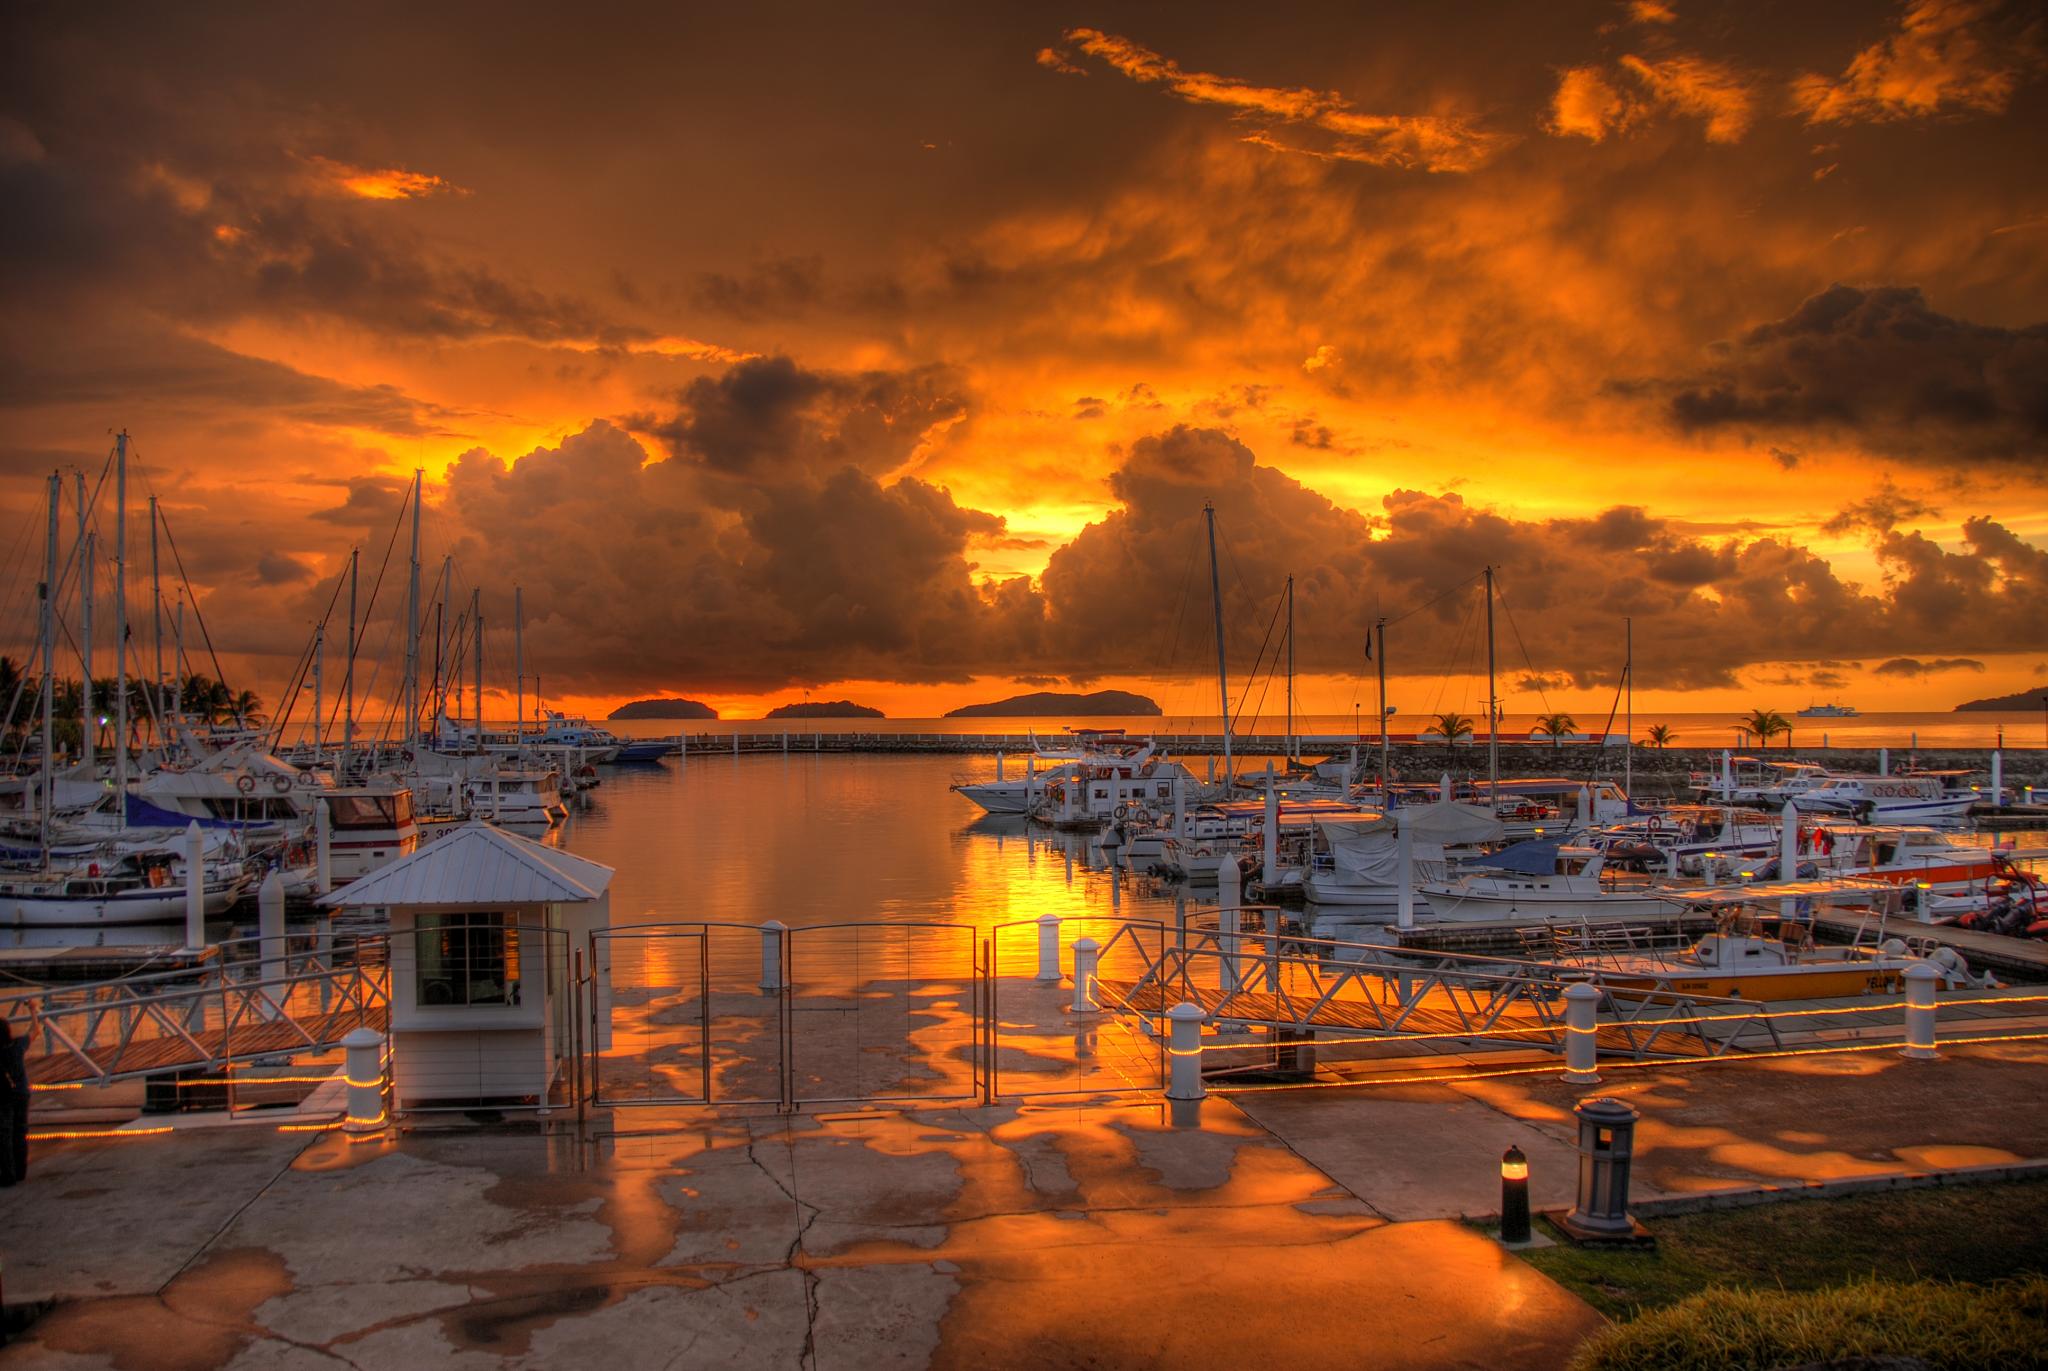 File:Sutera harbour sunset.jpg - Wikimedia Commons